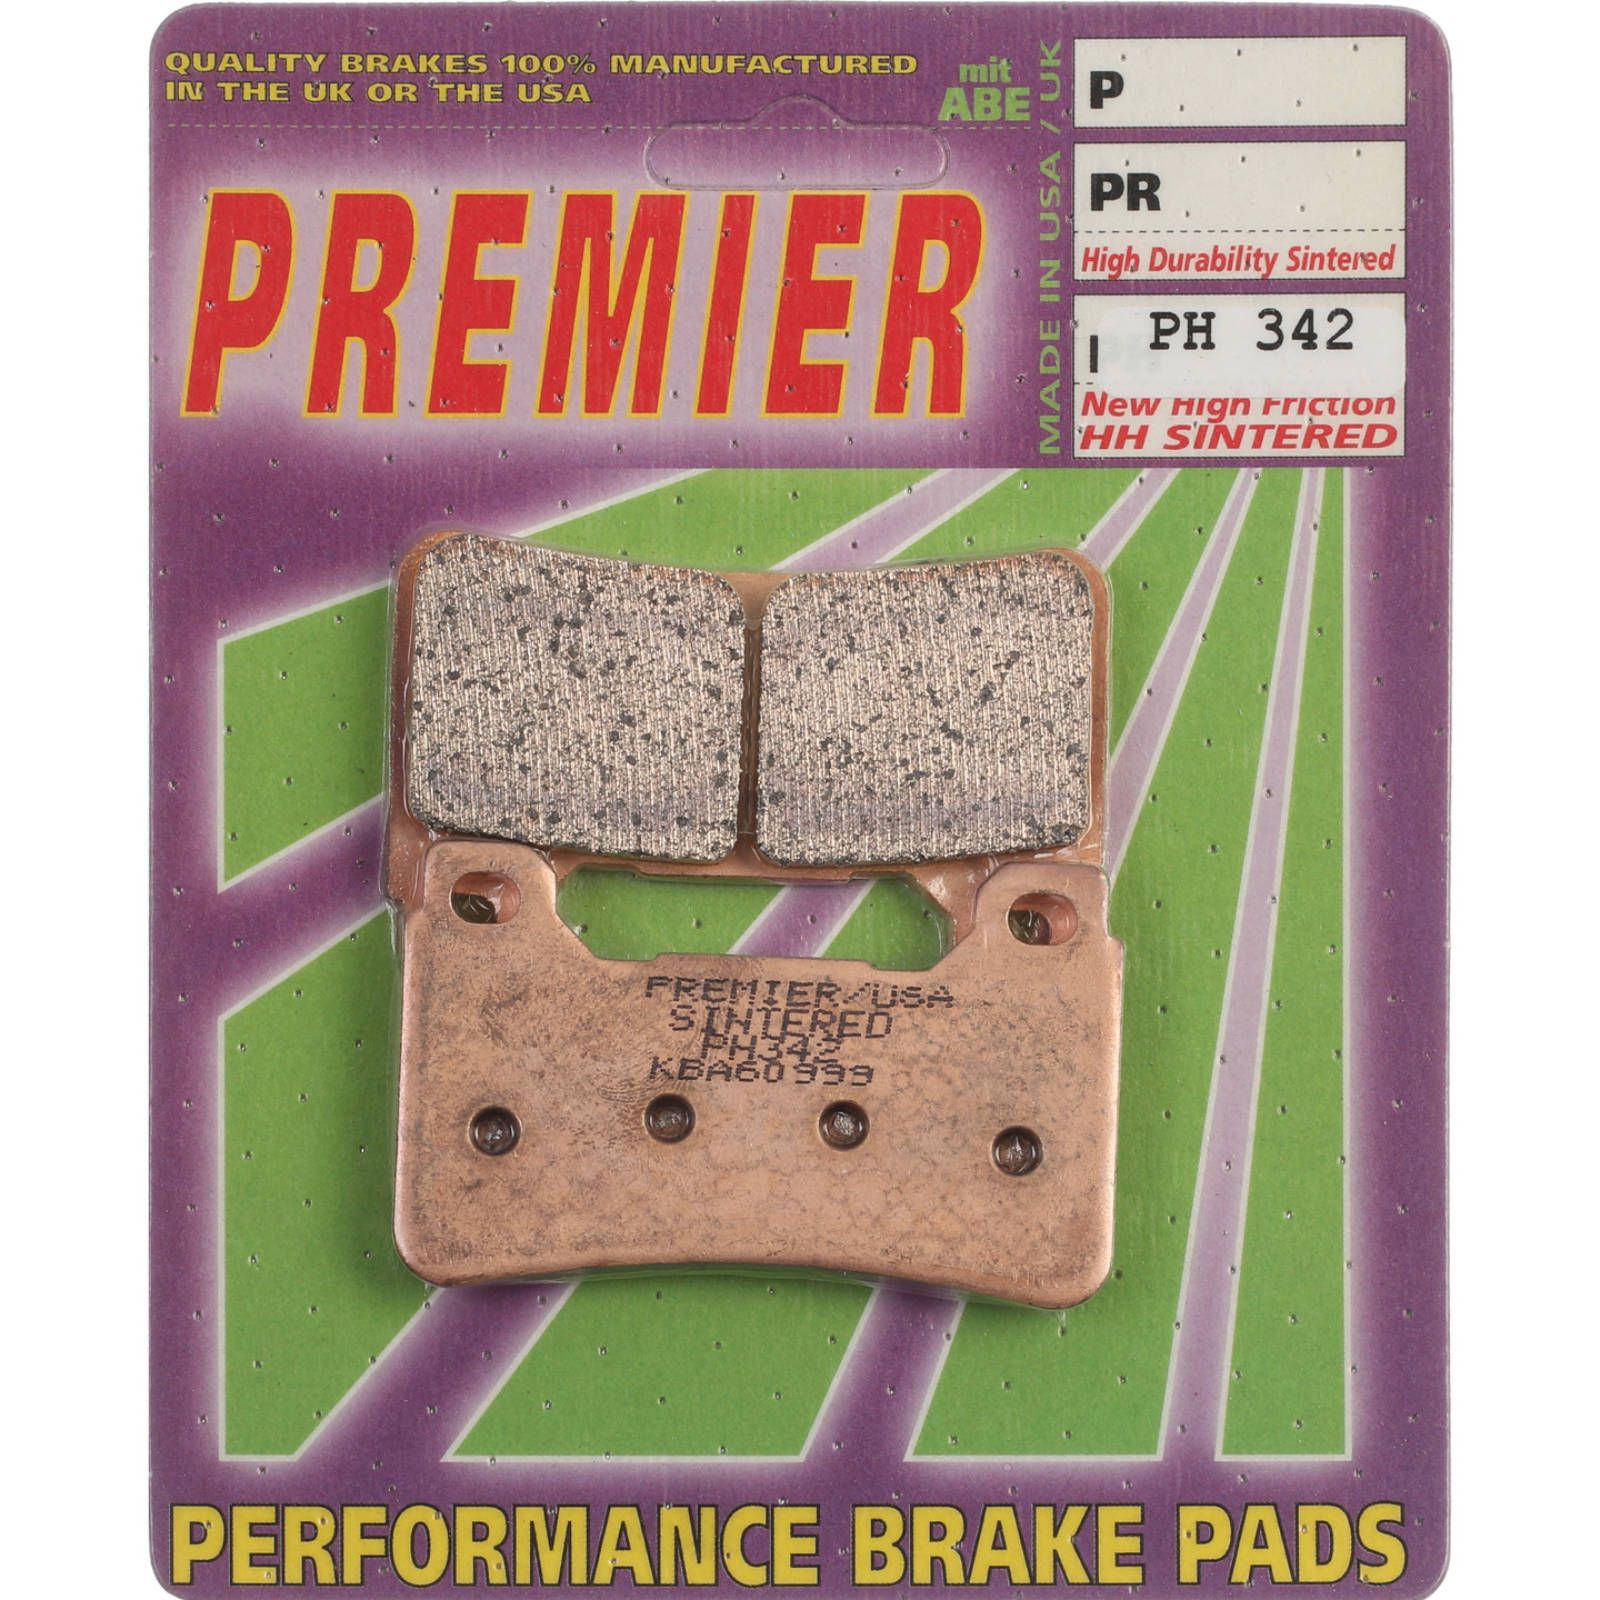 New PREMIER Brake Pad - PH Street Sintered (GF214S3) #PBPH342